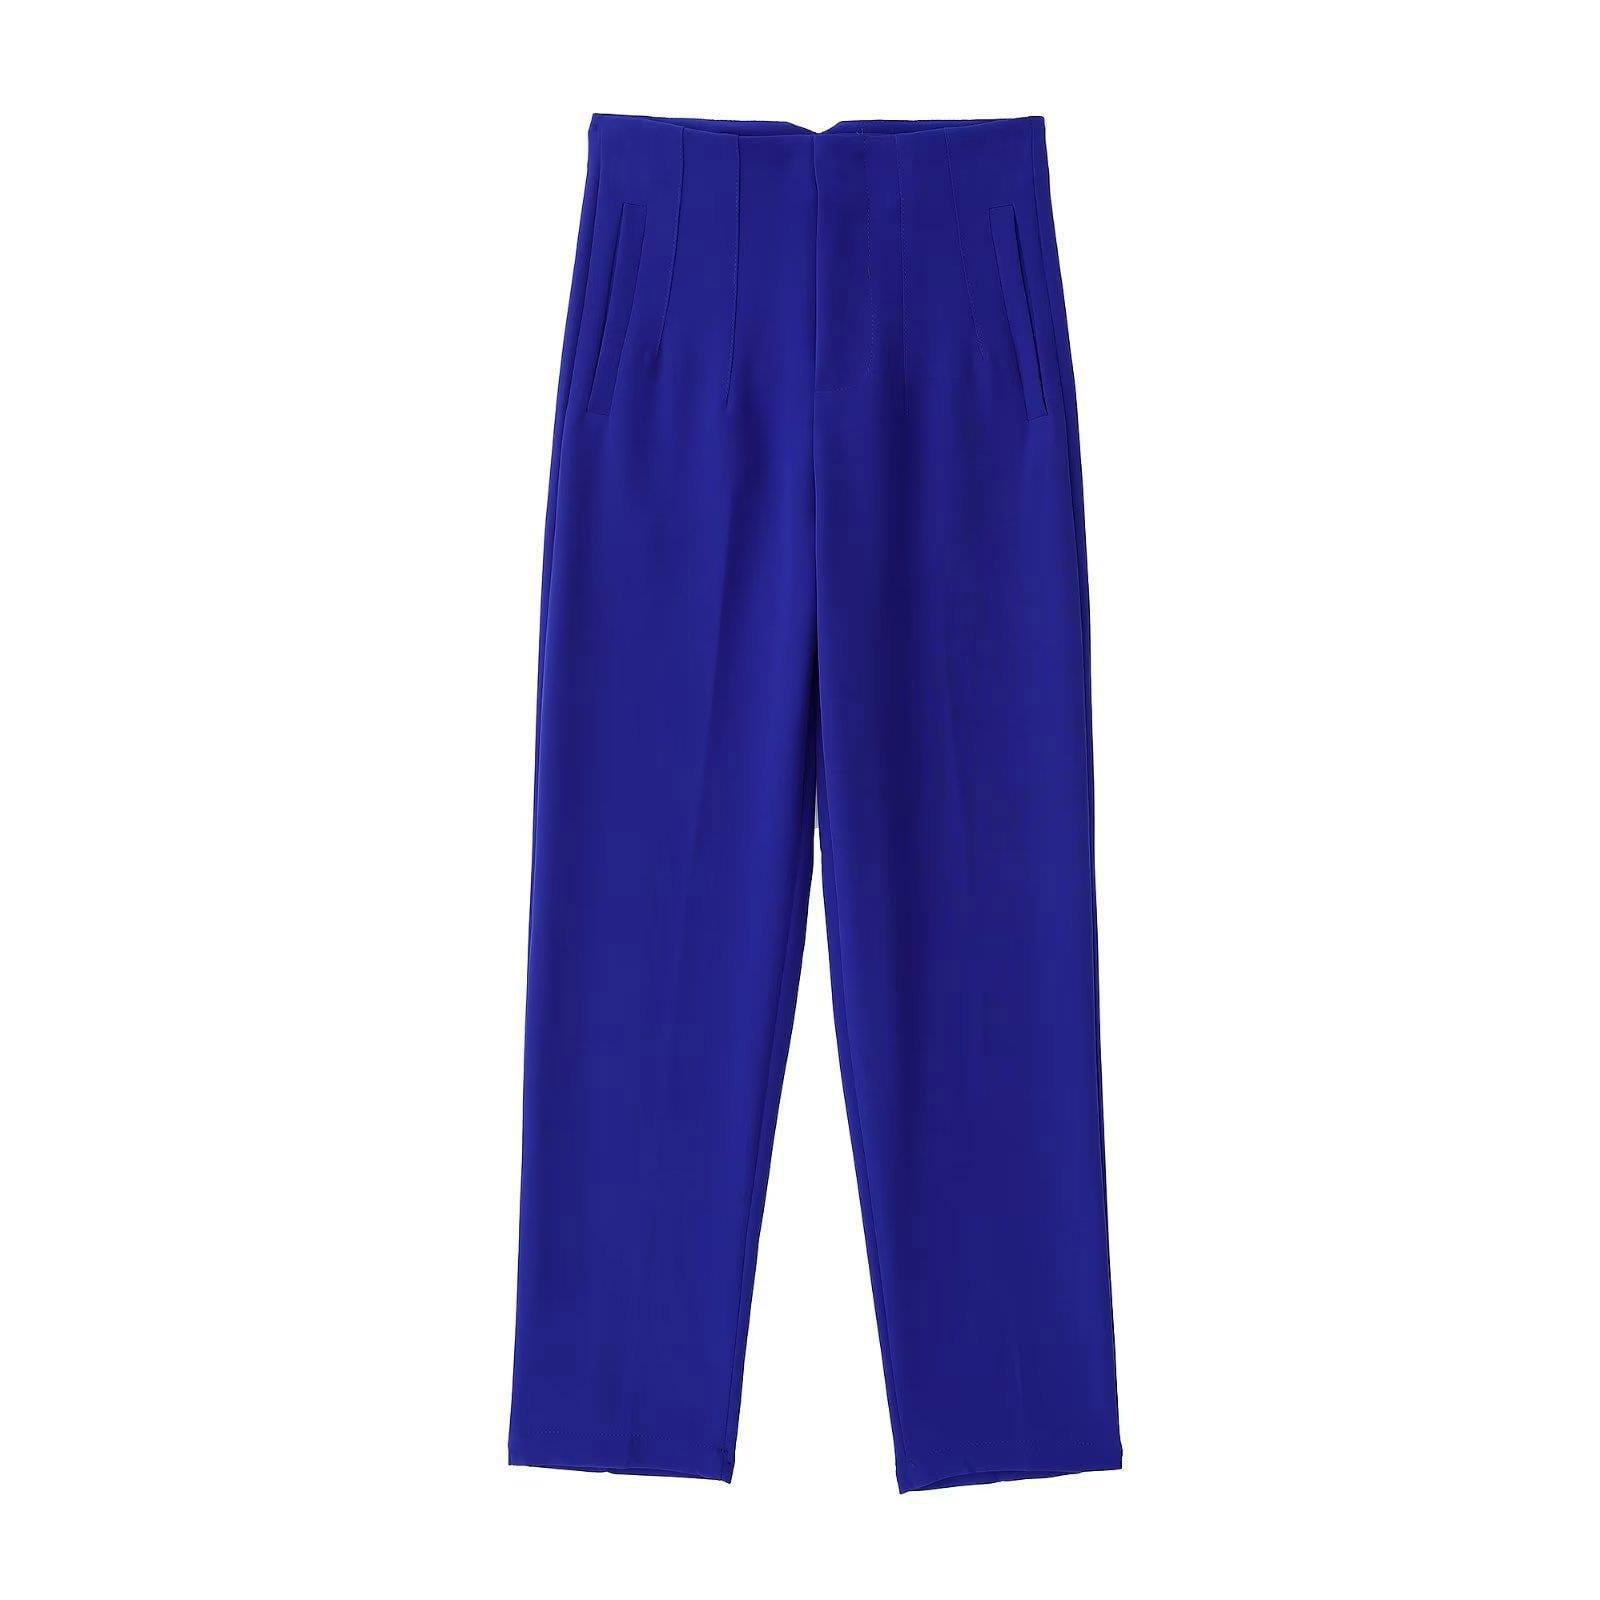 Cobalt Blue 4-Piece Trouser Skirt Suit - Sale from Yumi UK